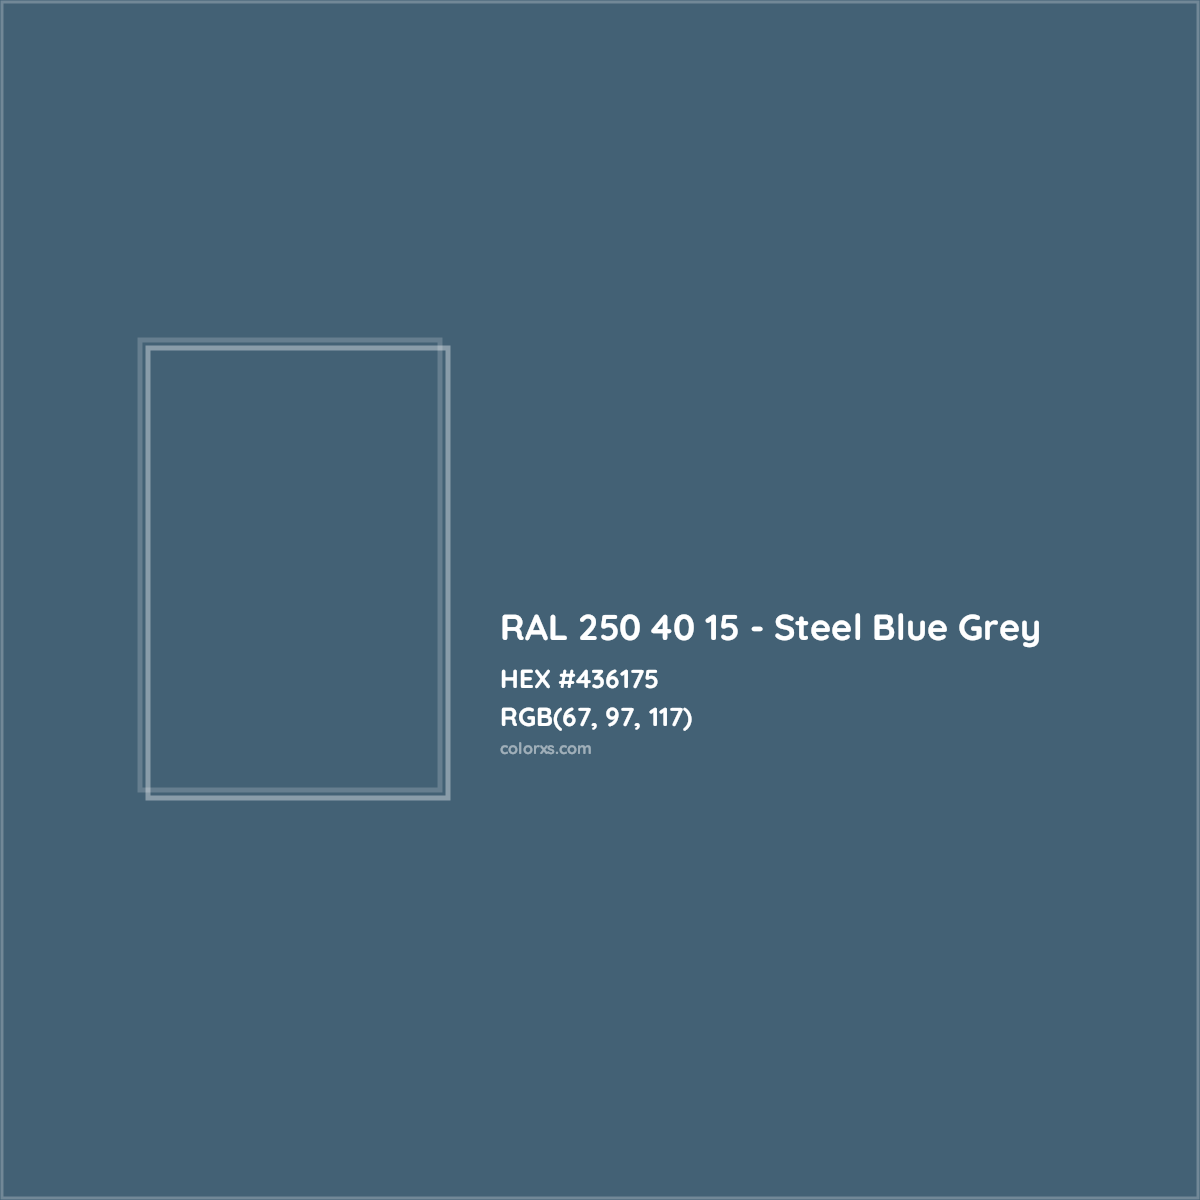 HEX #436175 RAL 250 40 15 - Steel Blue Grey CMS RAL Design - Color Code